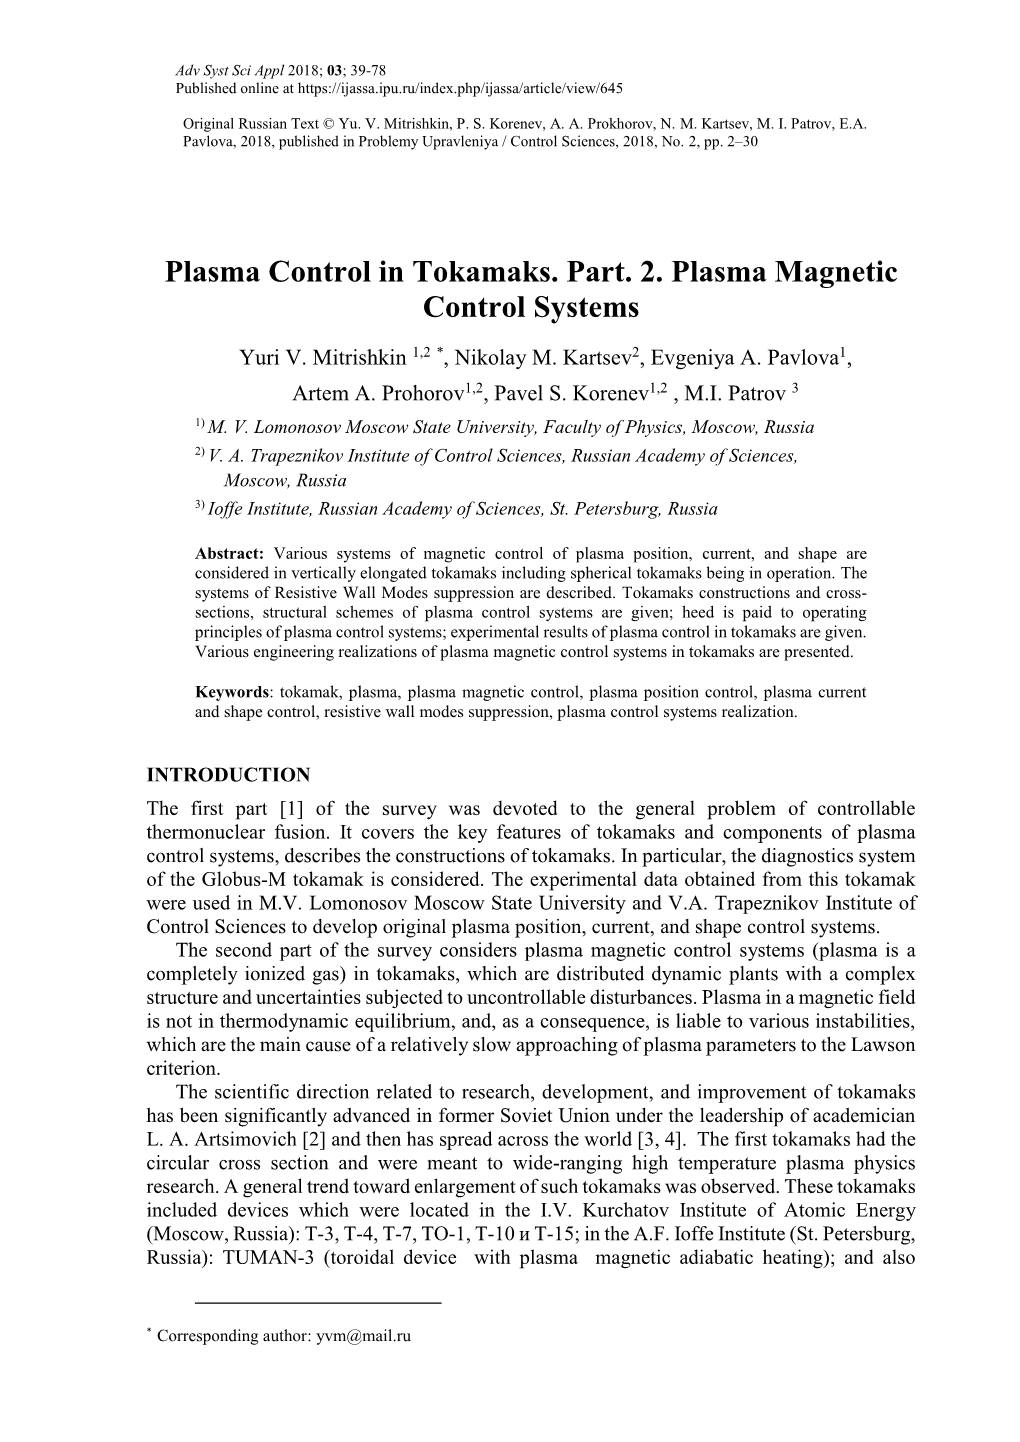 Plasma Control in Tokamaks. Part. 2. Plasma Magnetic Control Systems